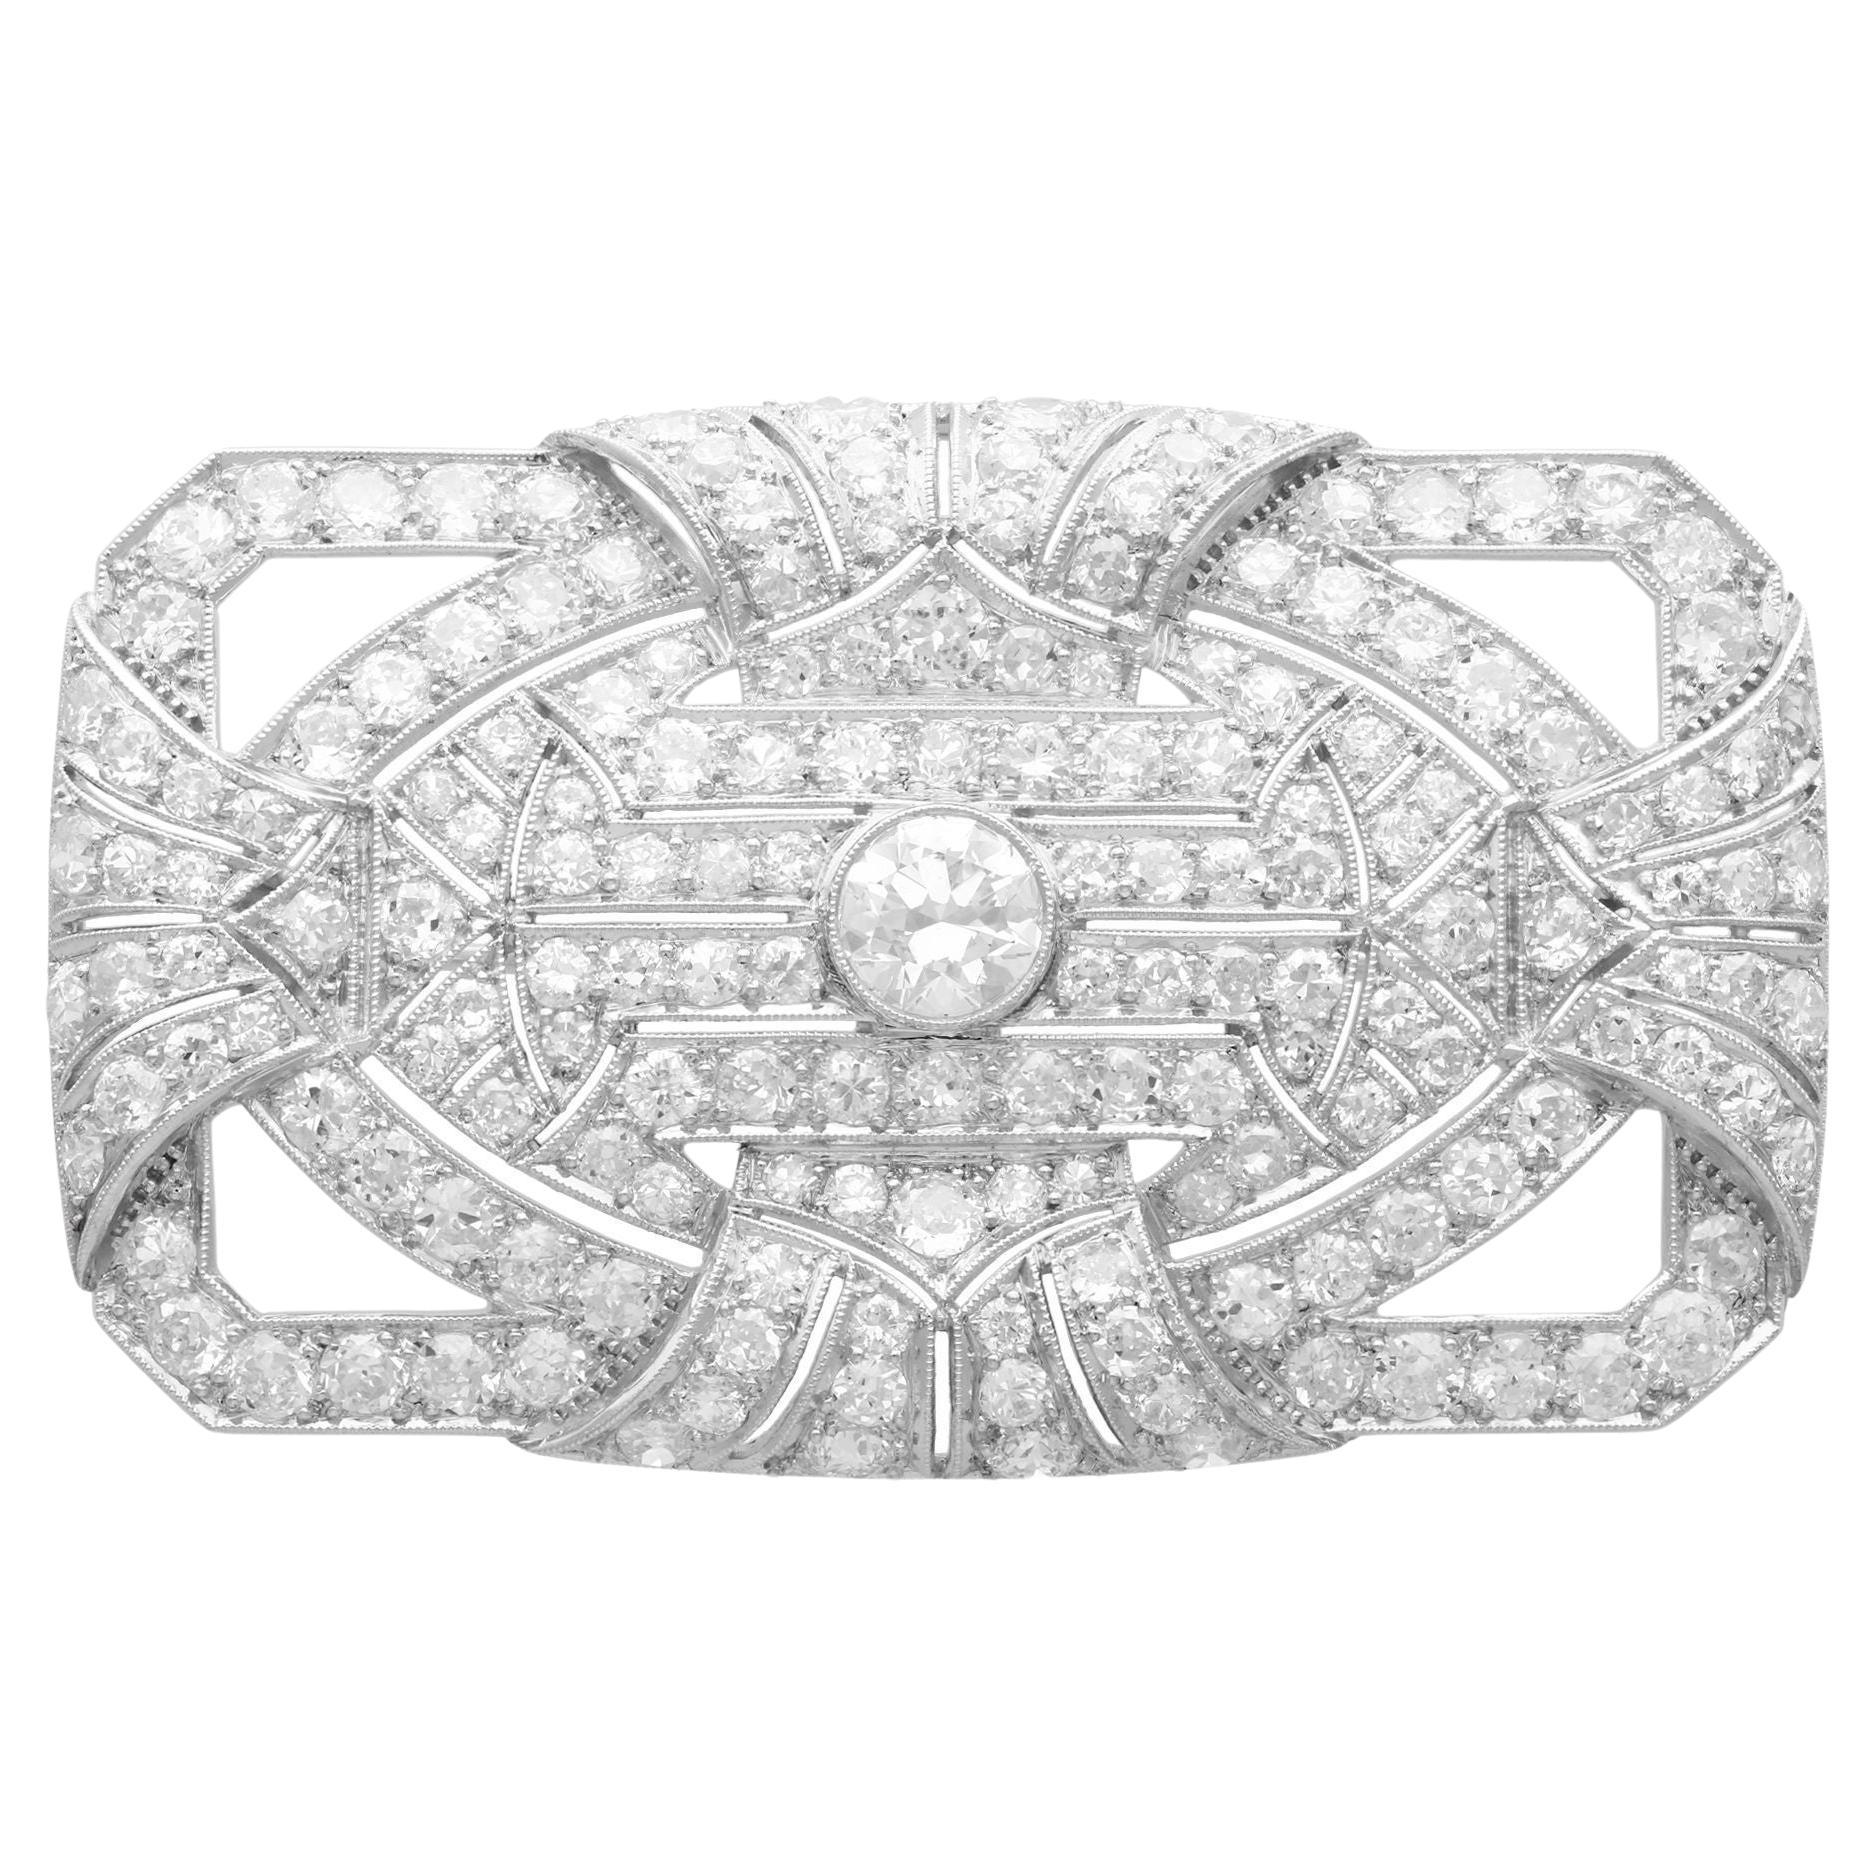 Art Deco 8.13 Carat Diamond and Platinum Brooch